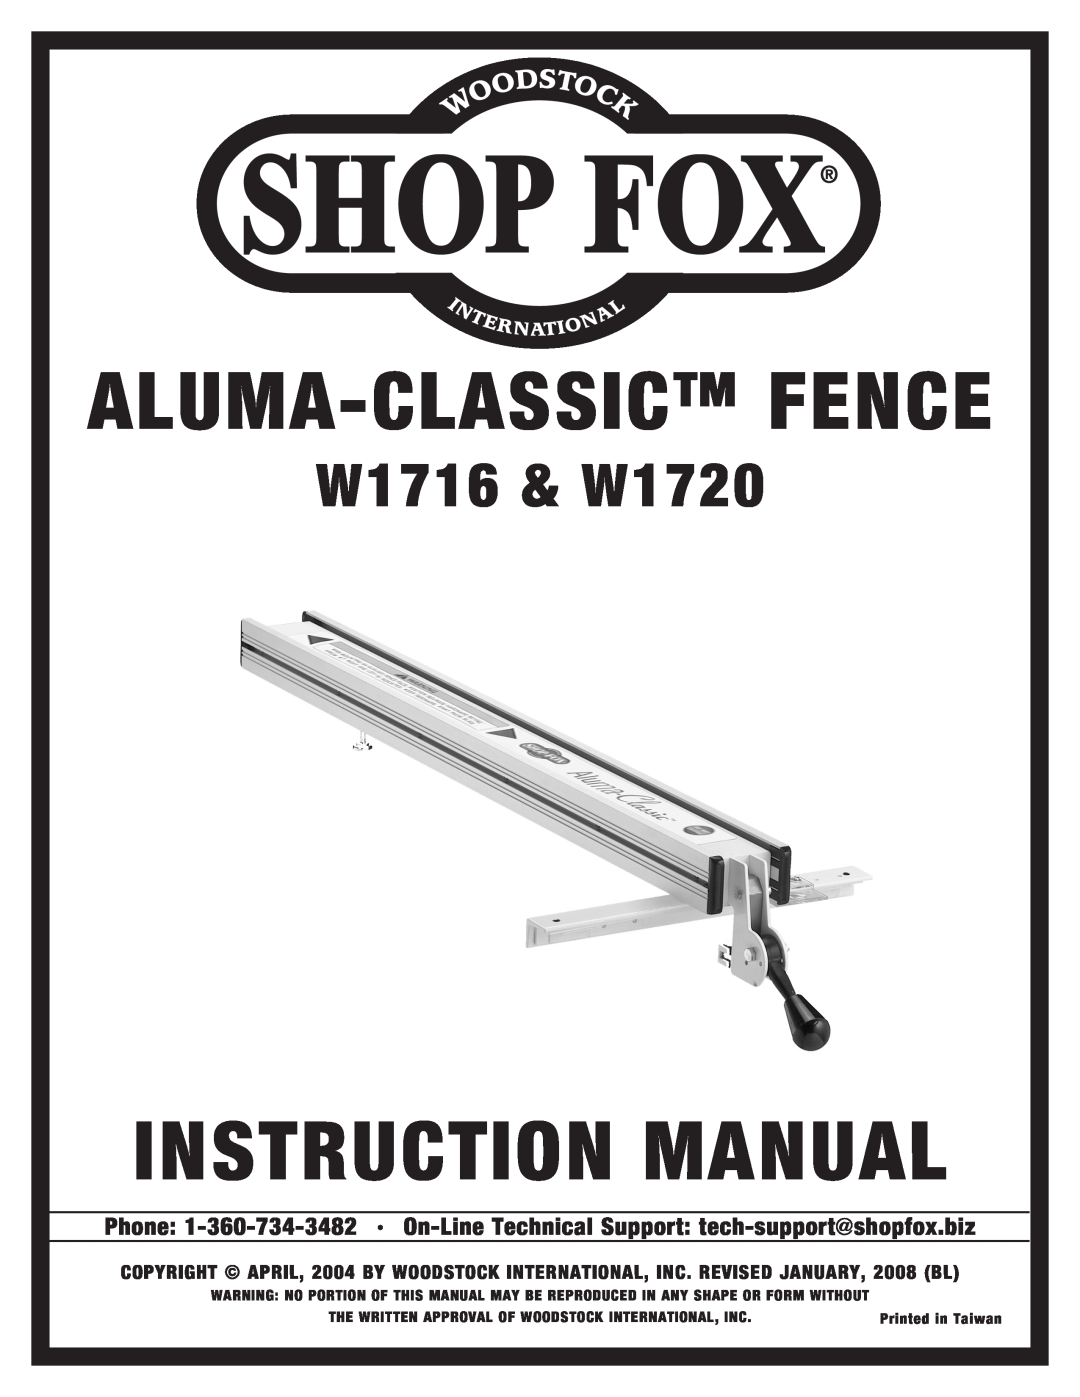 Woodstock instruction manual Aluma-Classicfence, W1716 & W1720 